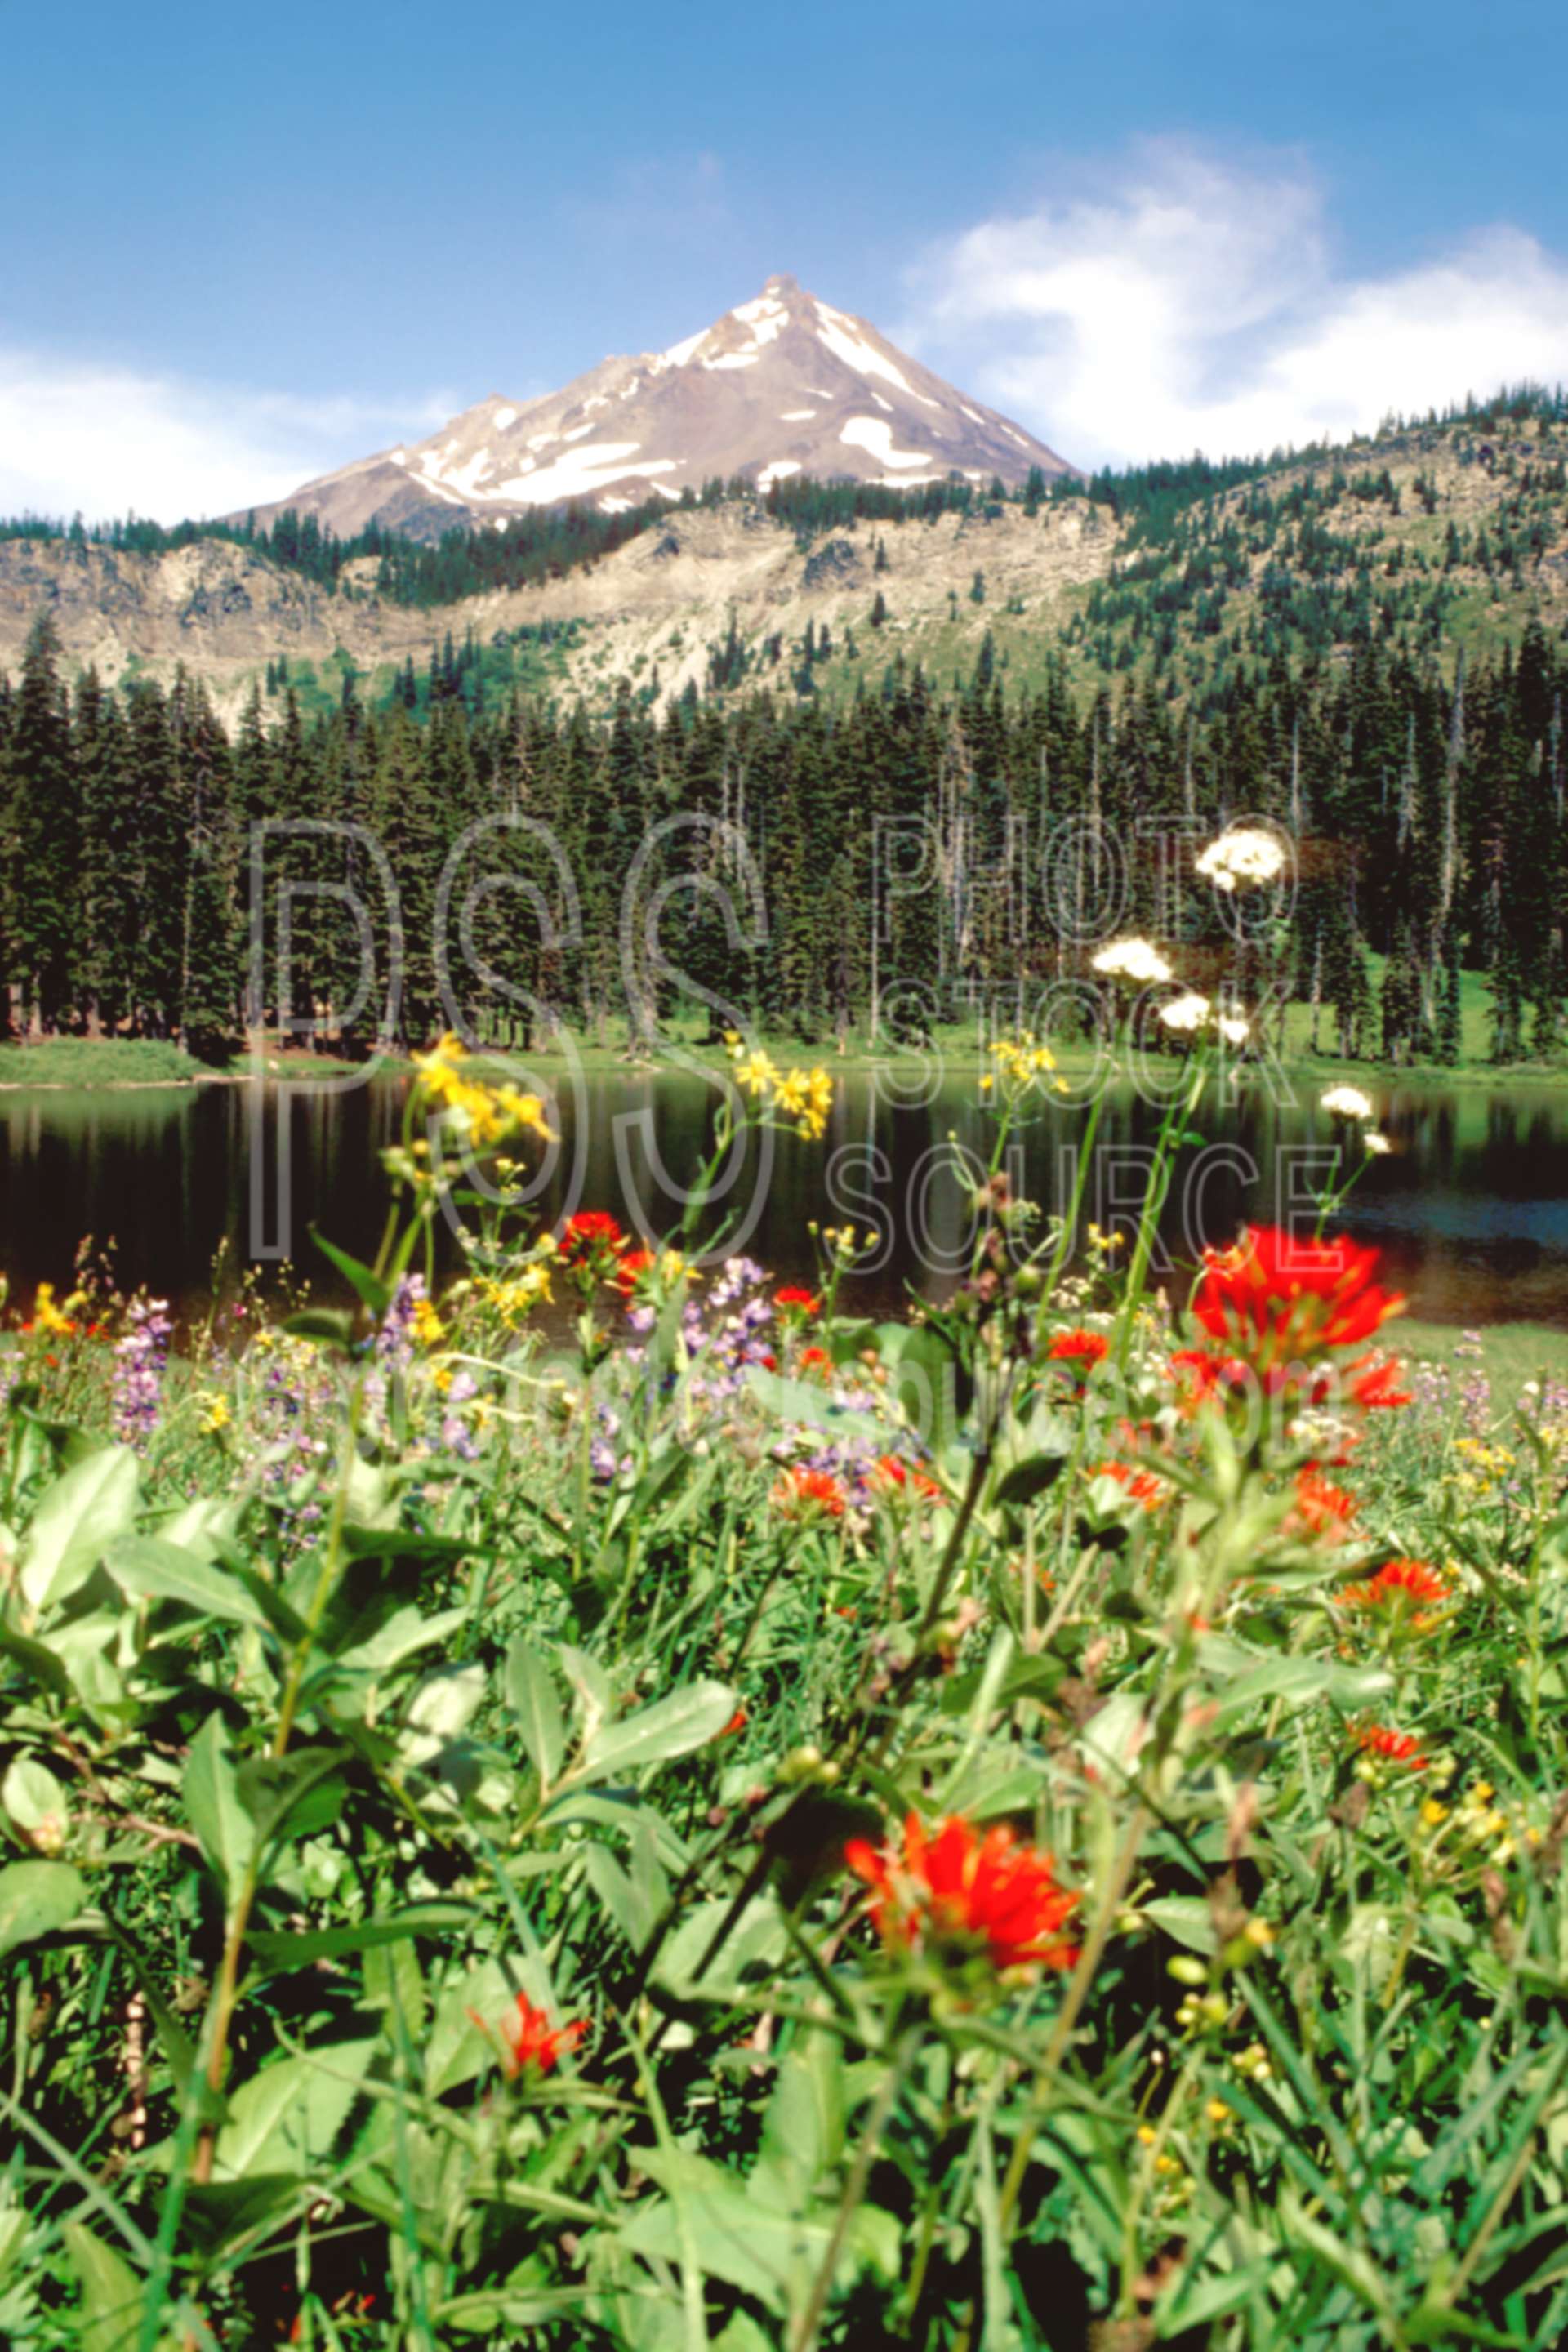 Mt. Jefferson Hanks Lake,flower,hanks lake,mt. jefferson,wildflower,mount,plant,usas,lakes rivers,mountains,plants